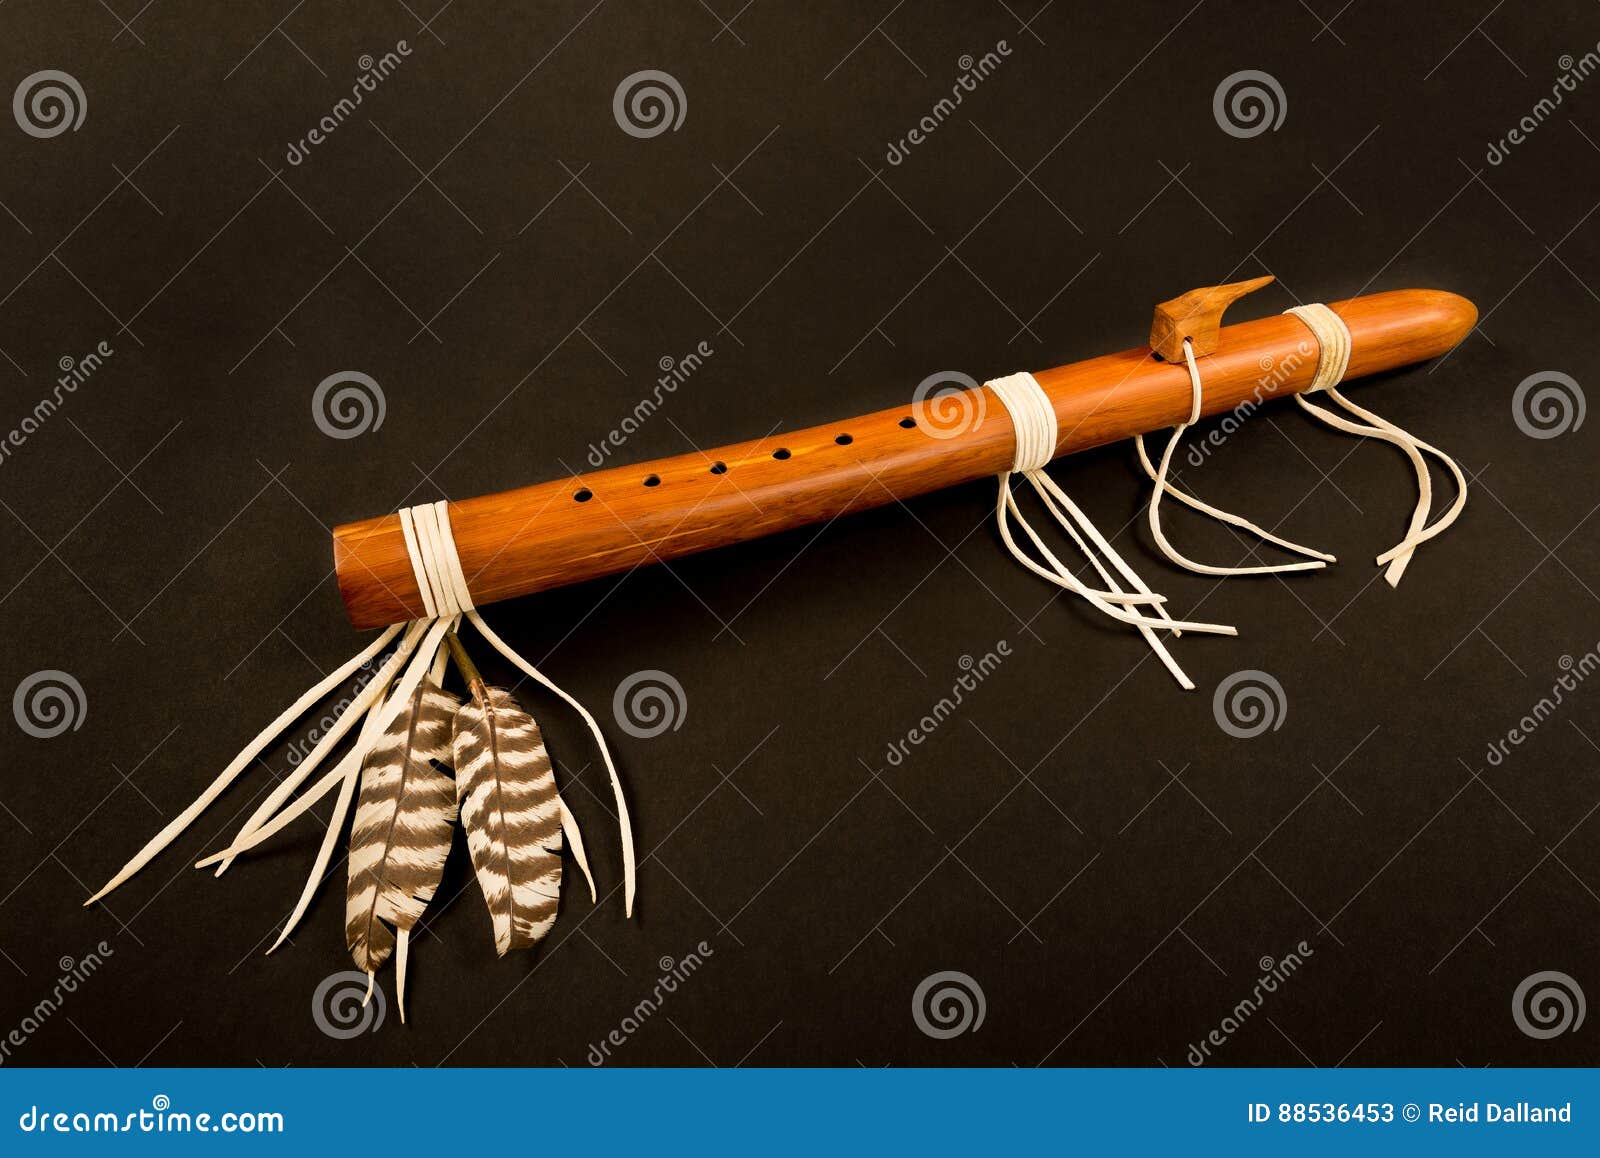 primitive antique native american flute.